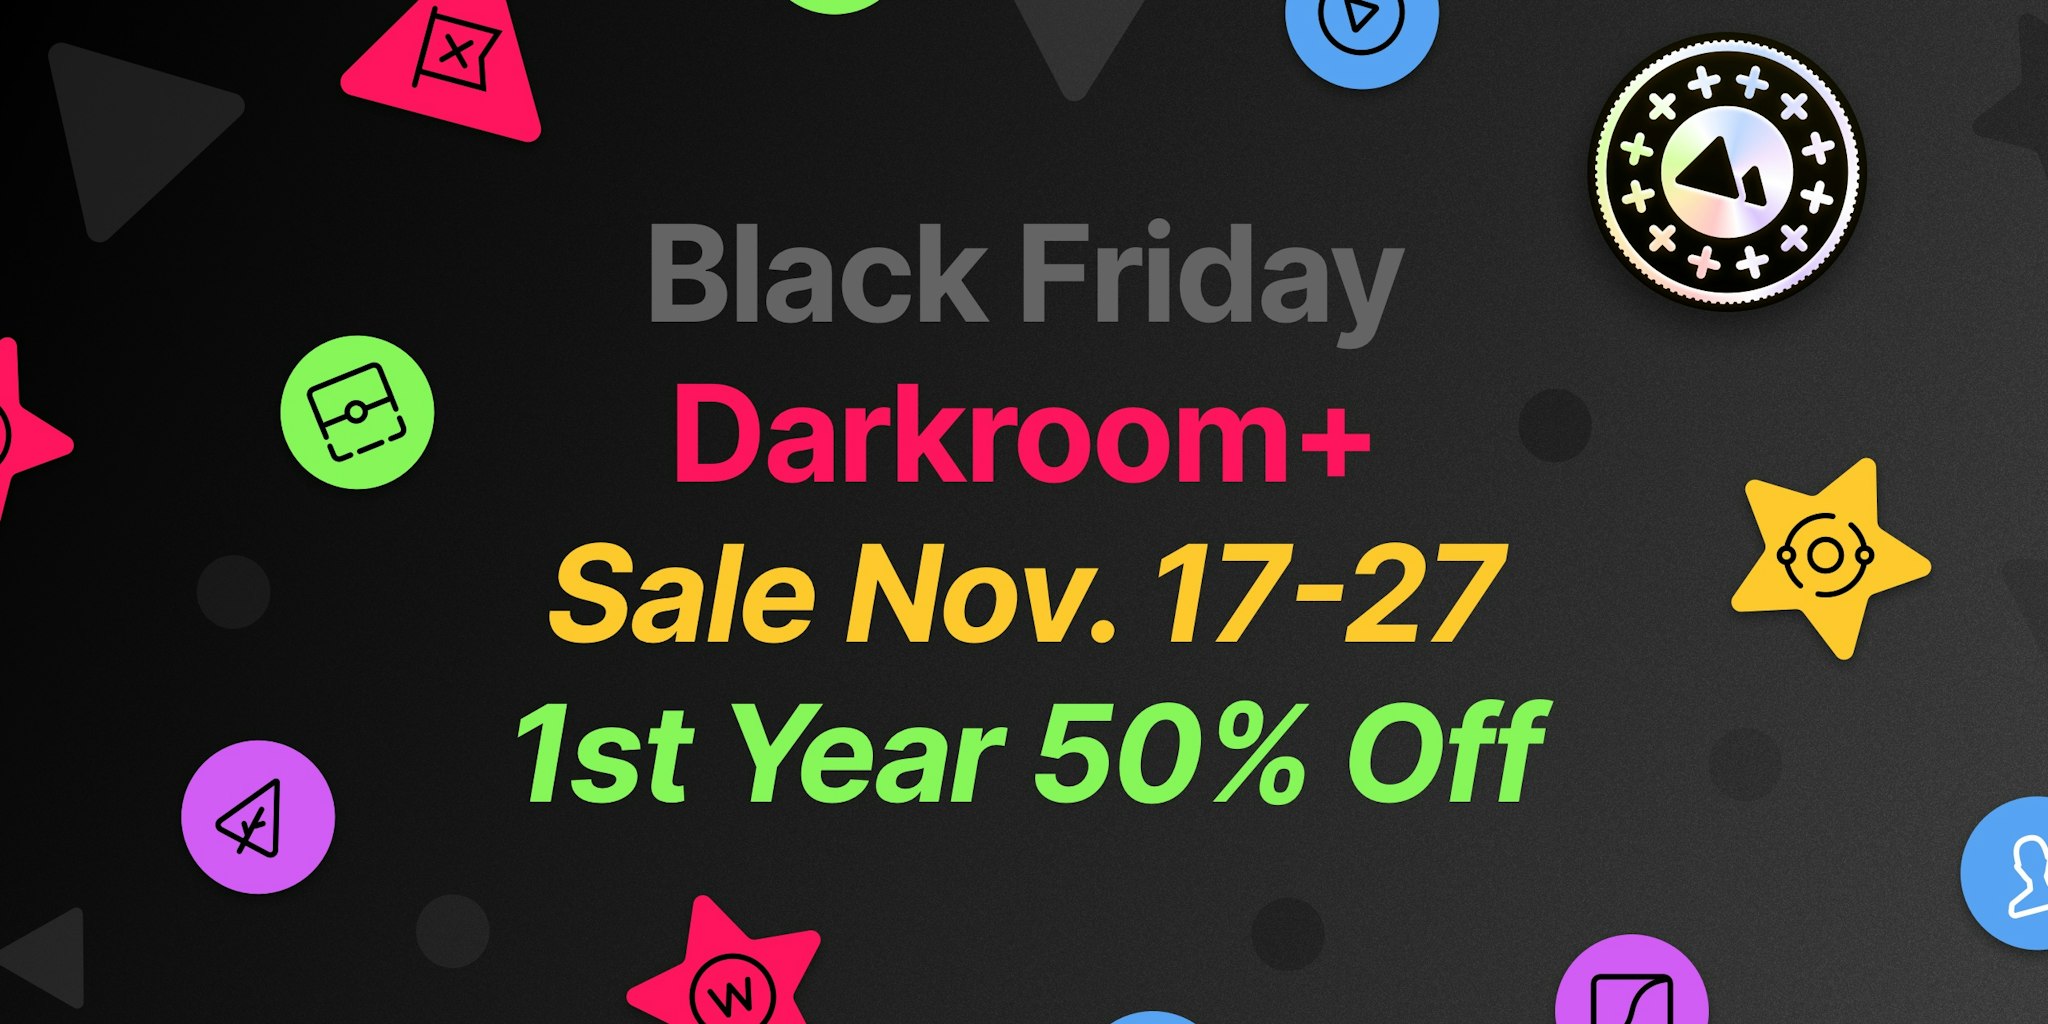 Cover Image for Black Friday Week Darkroom+ Sale